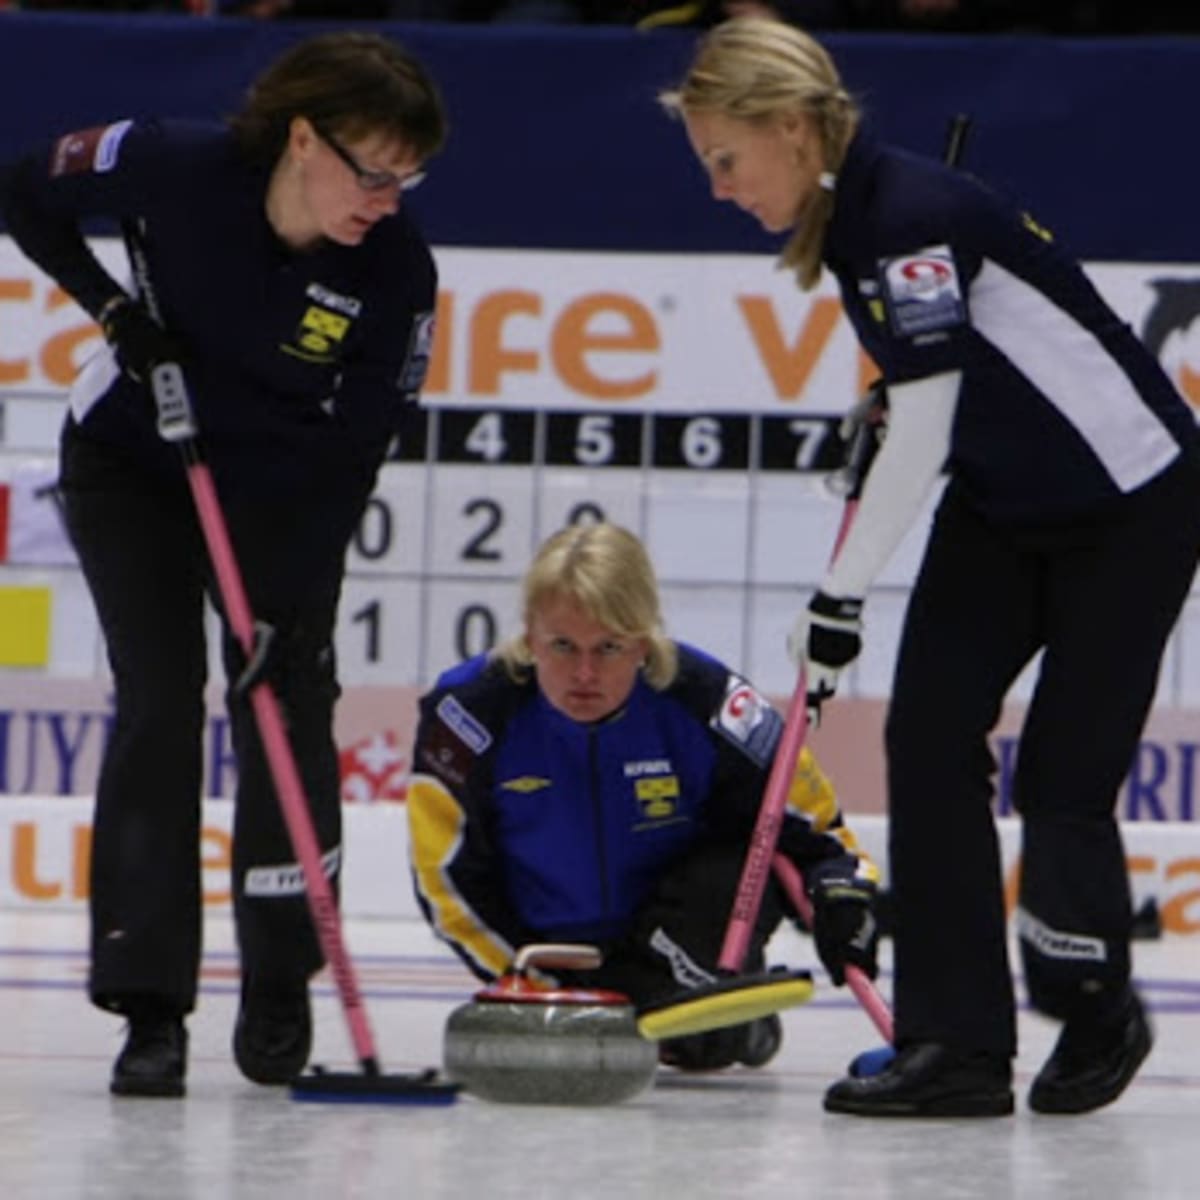 Swedish TV “broke” curling show